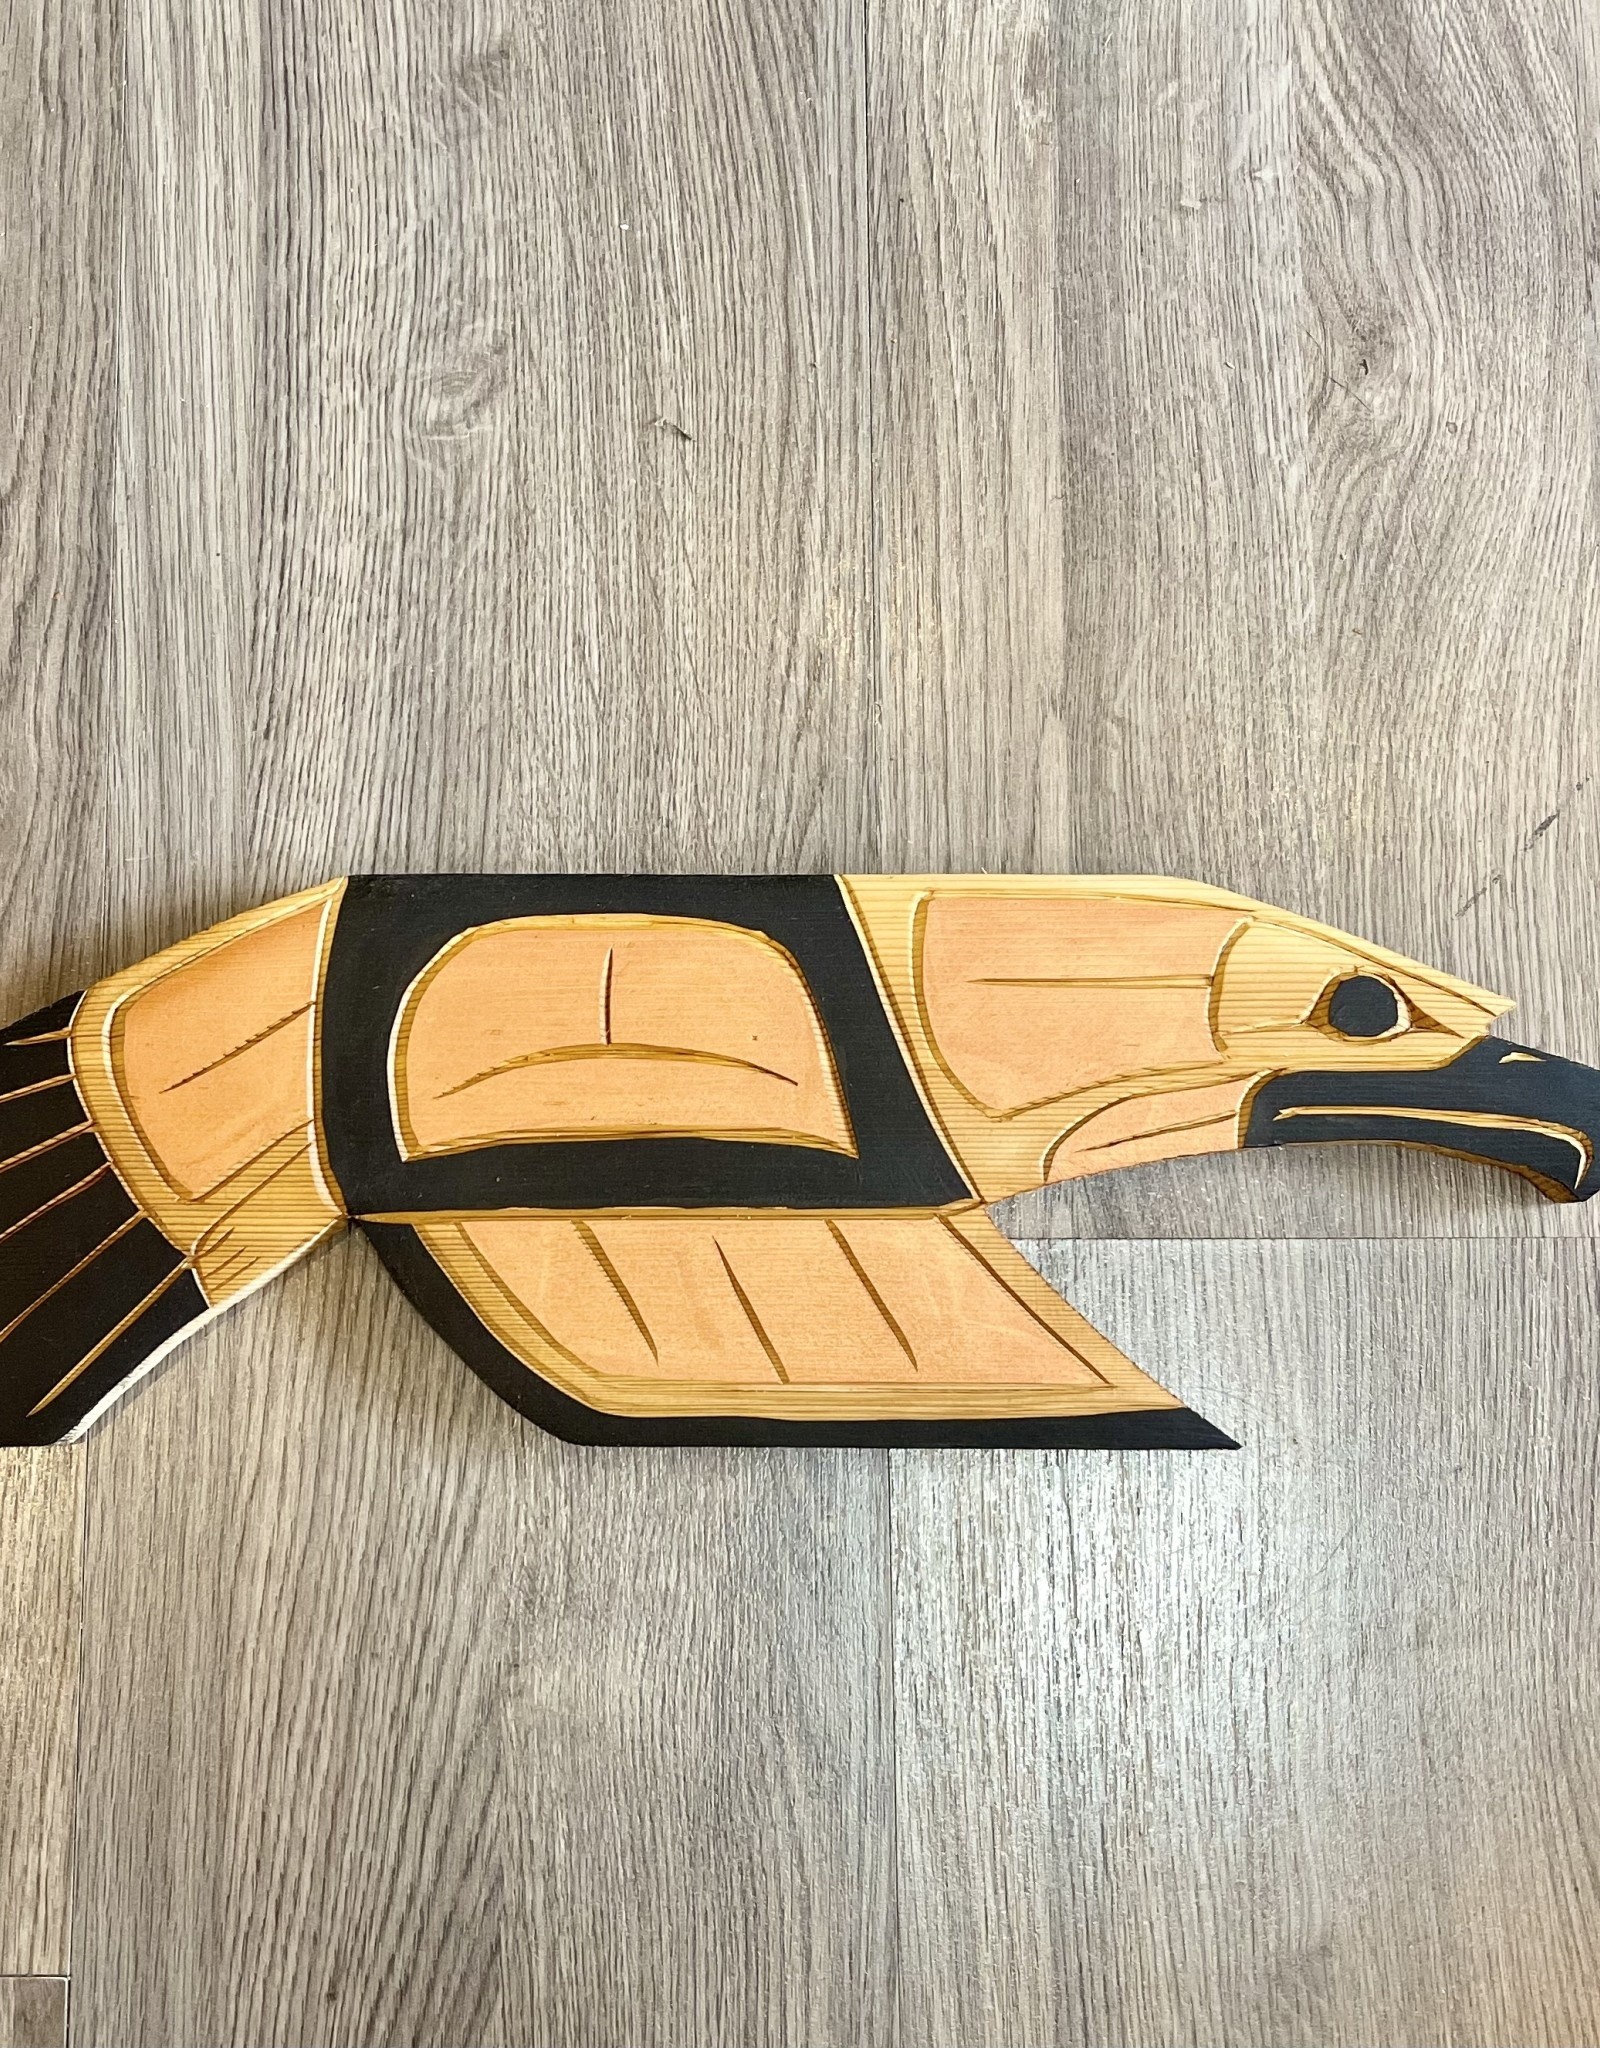 Aboriginal - Eagle Aboriginal Carving by Greg Sylvester